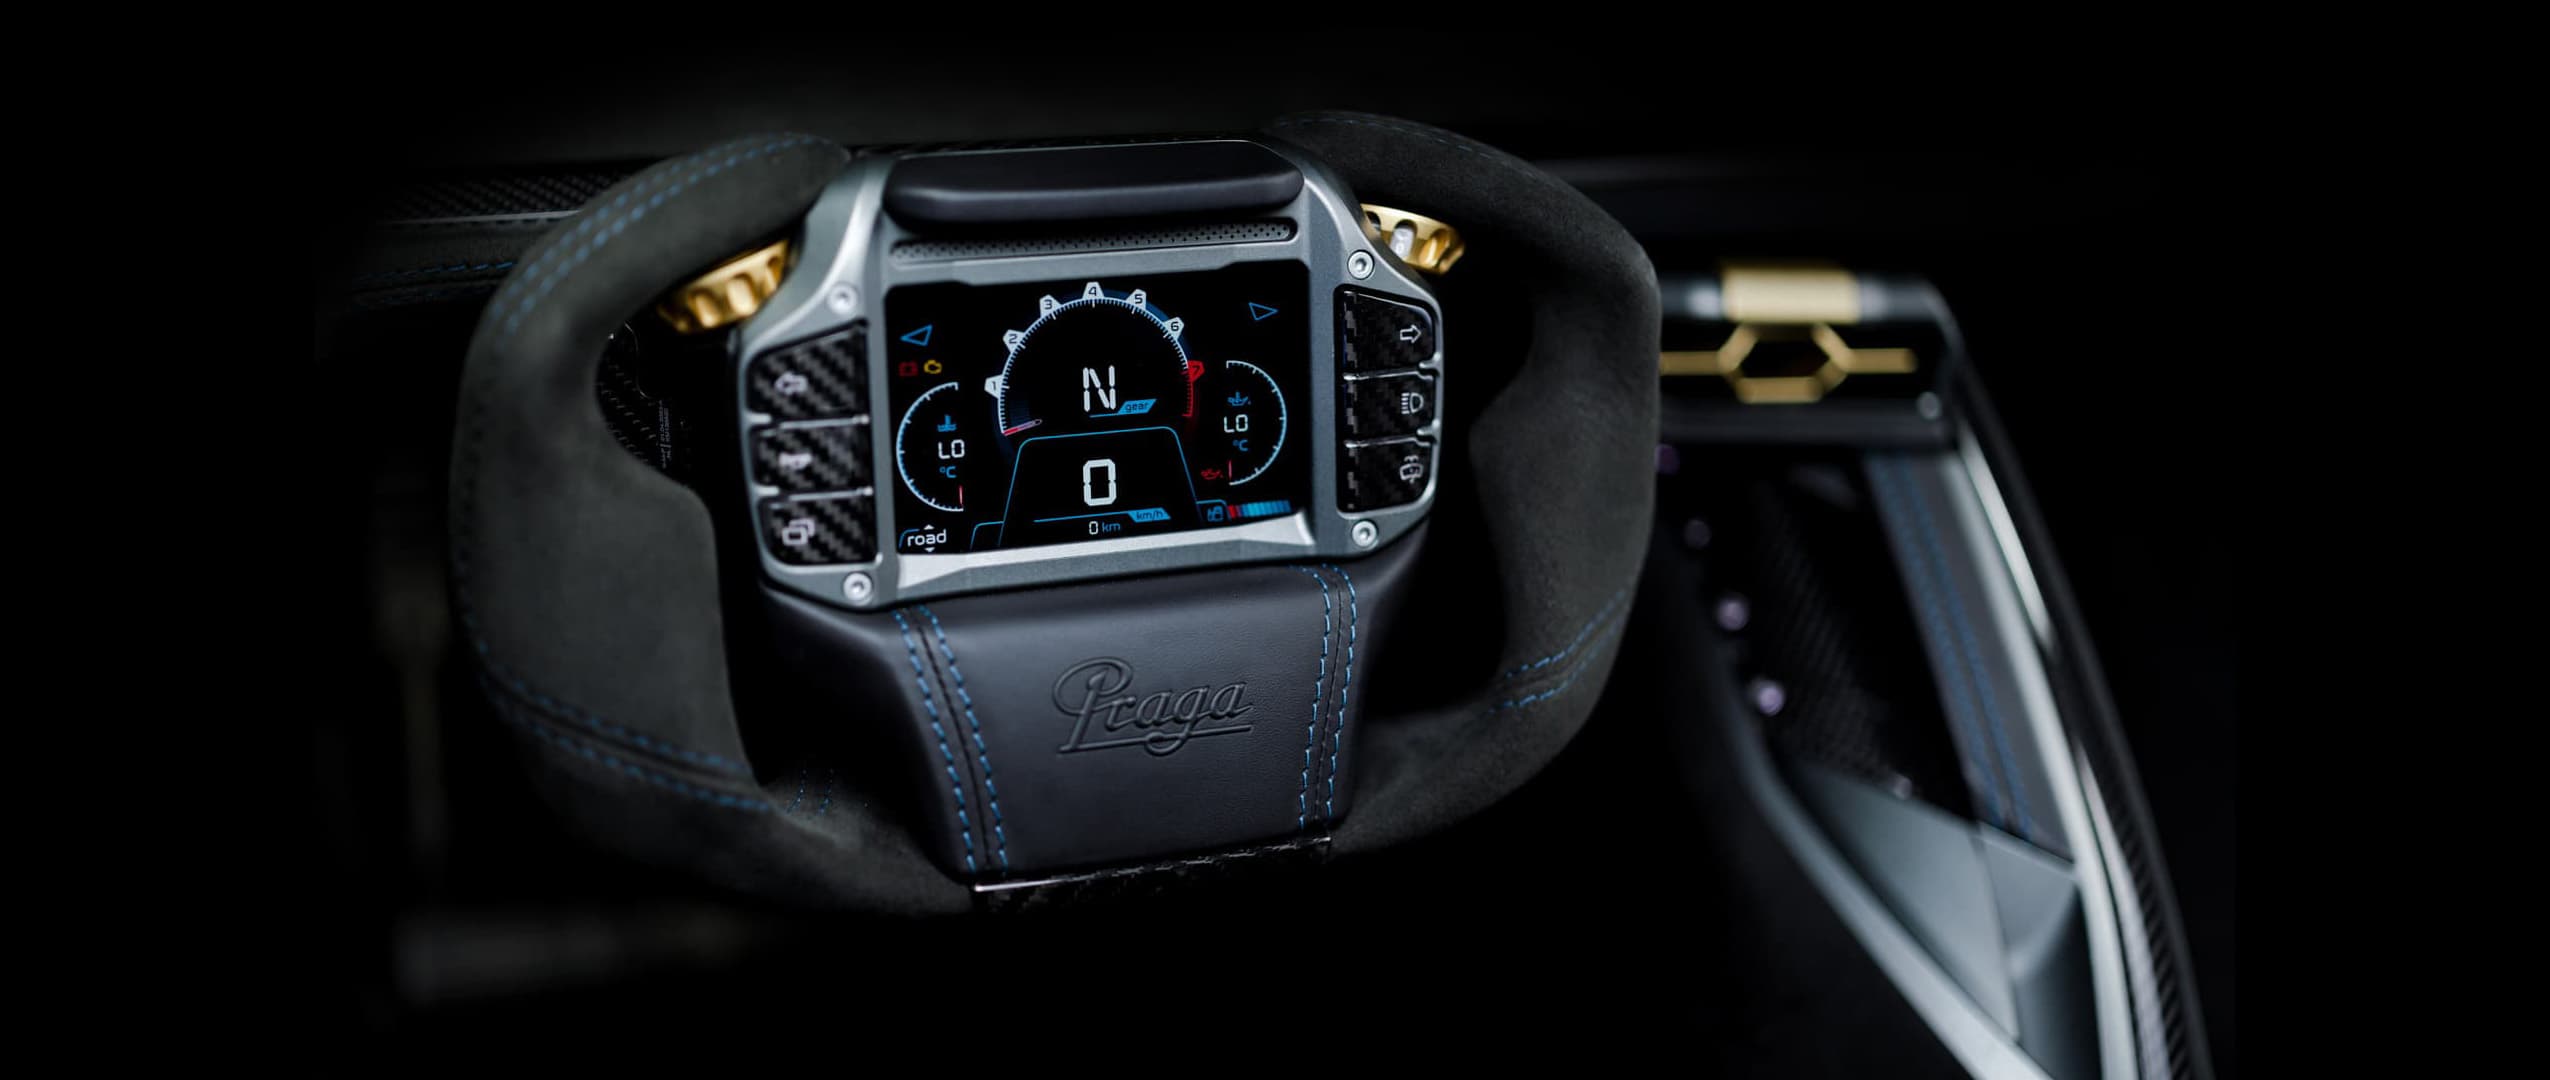 Steering wheel with display